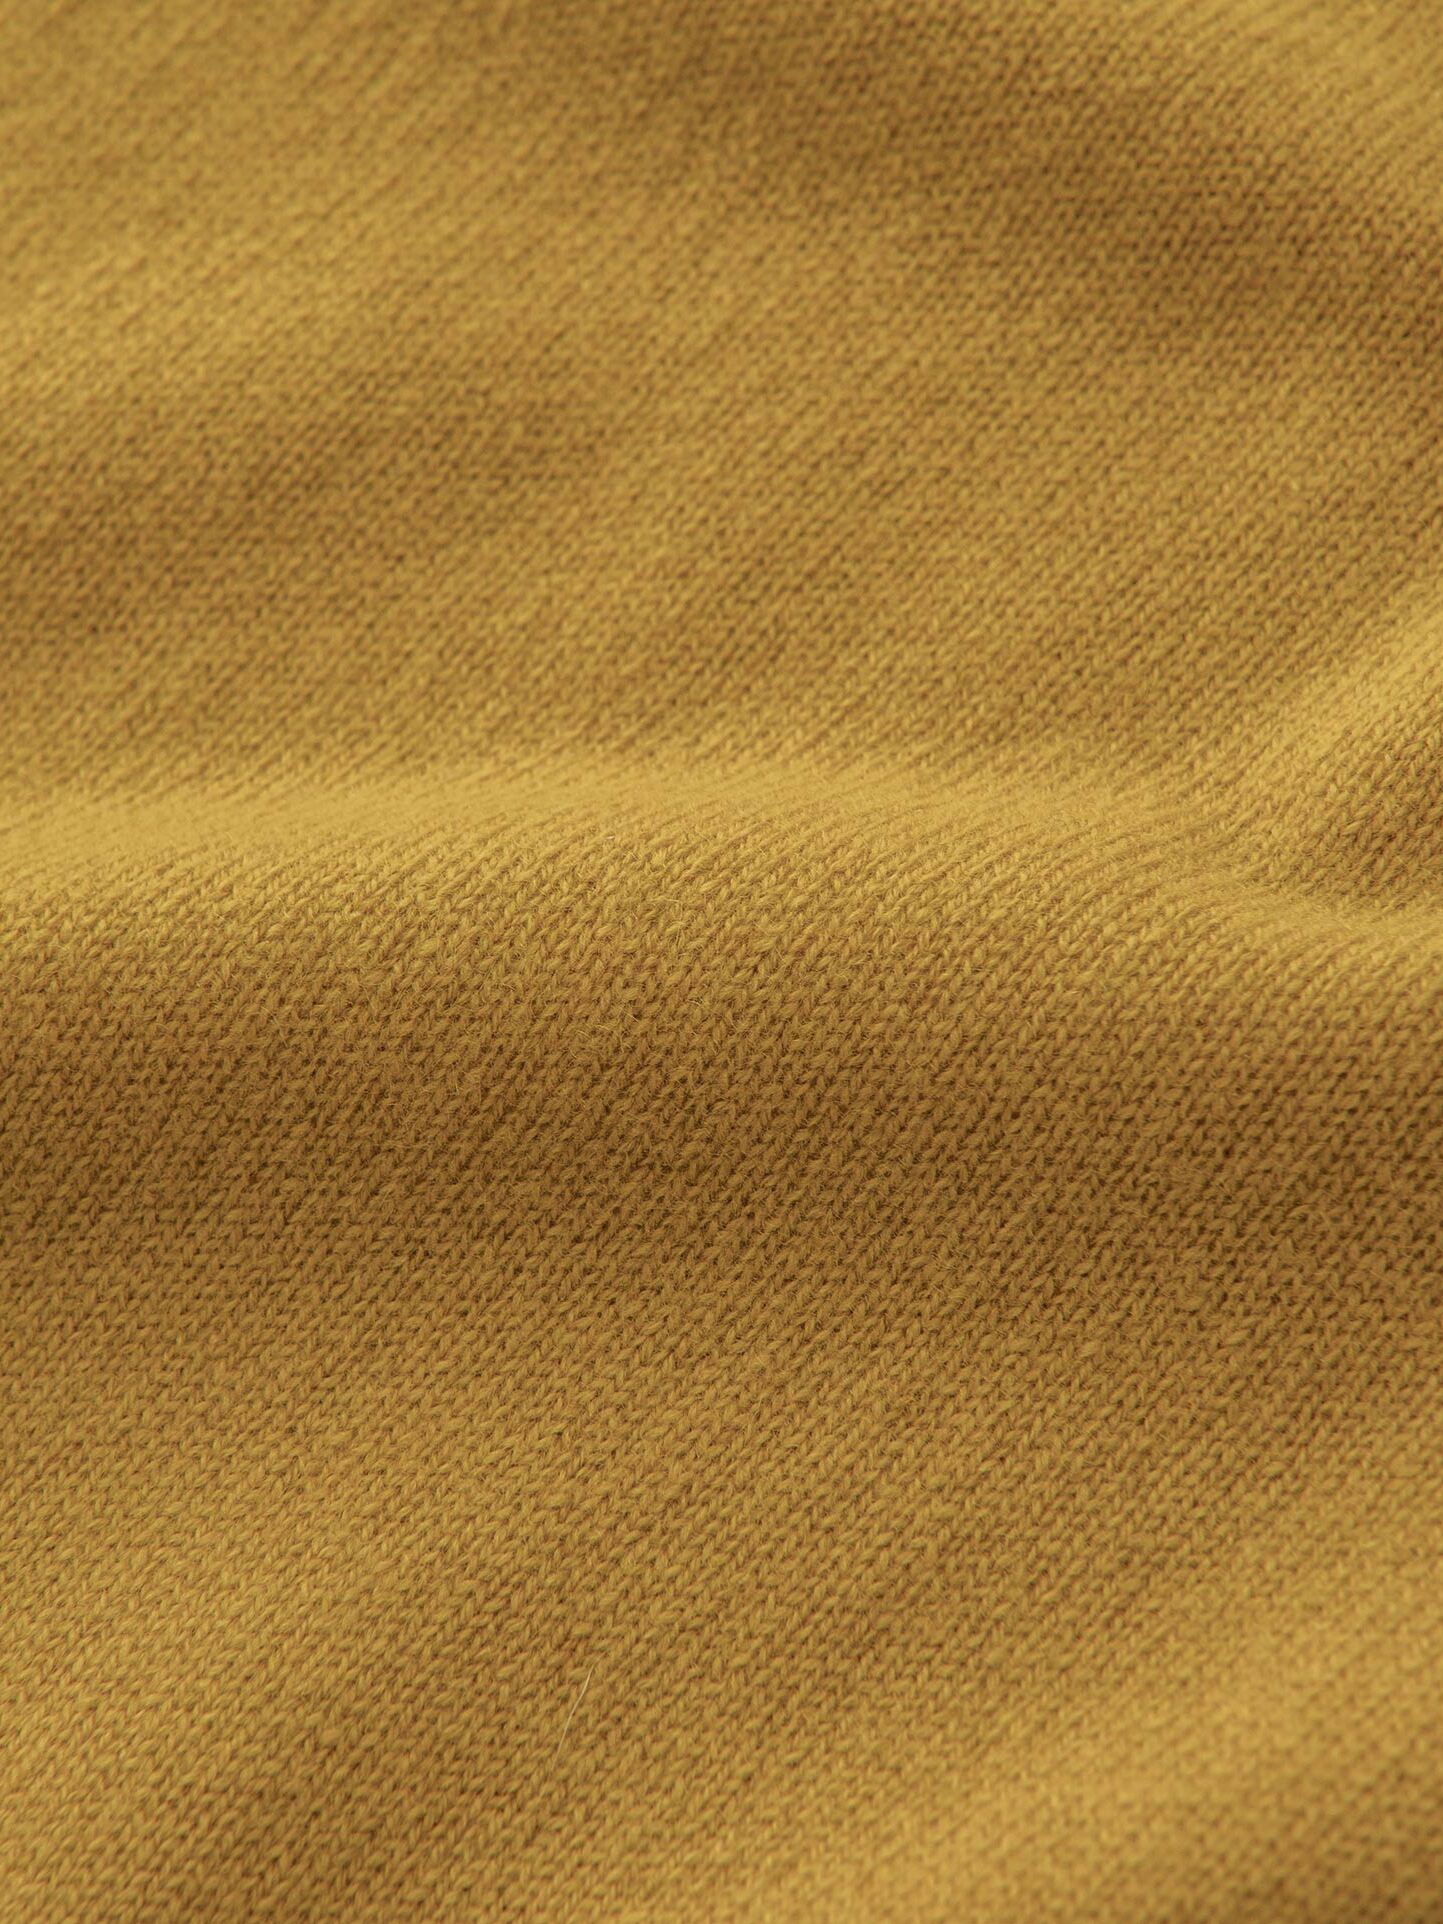 Goldenrod Cashmere Crewneck by Proper Cloth